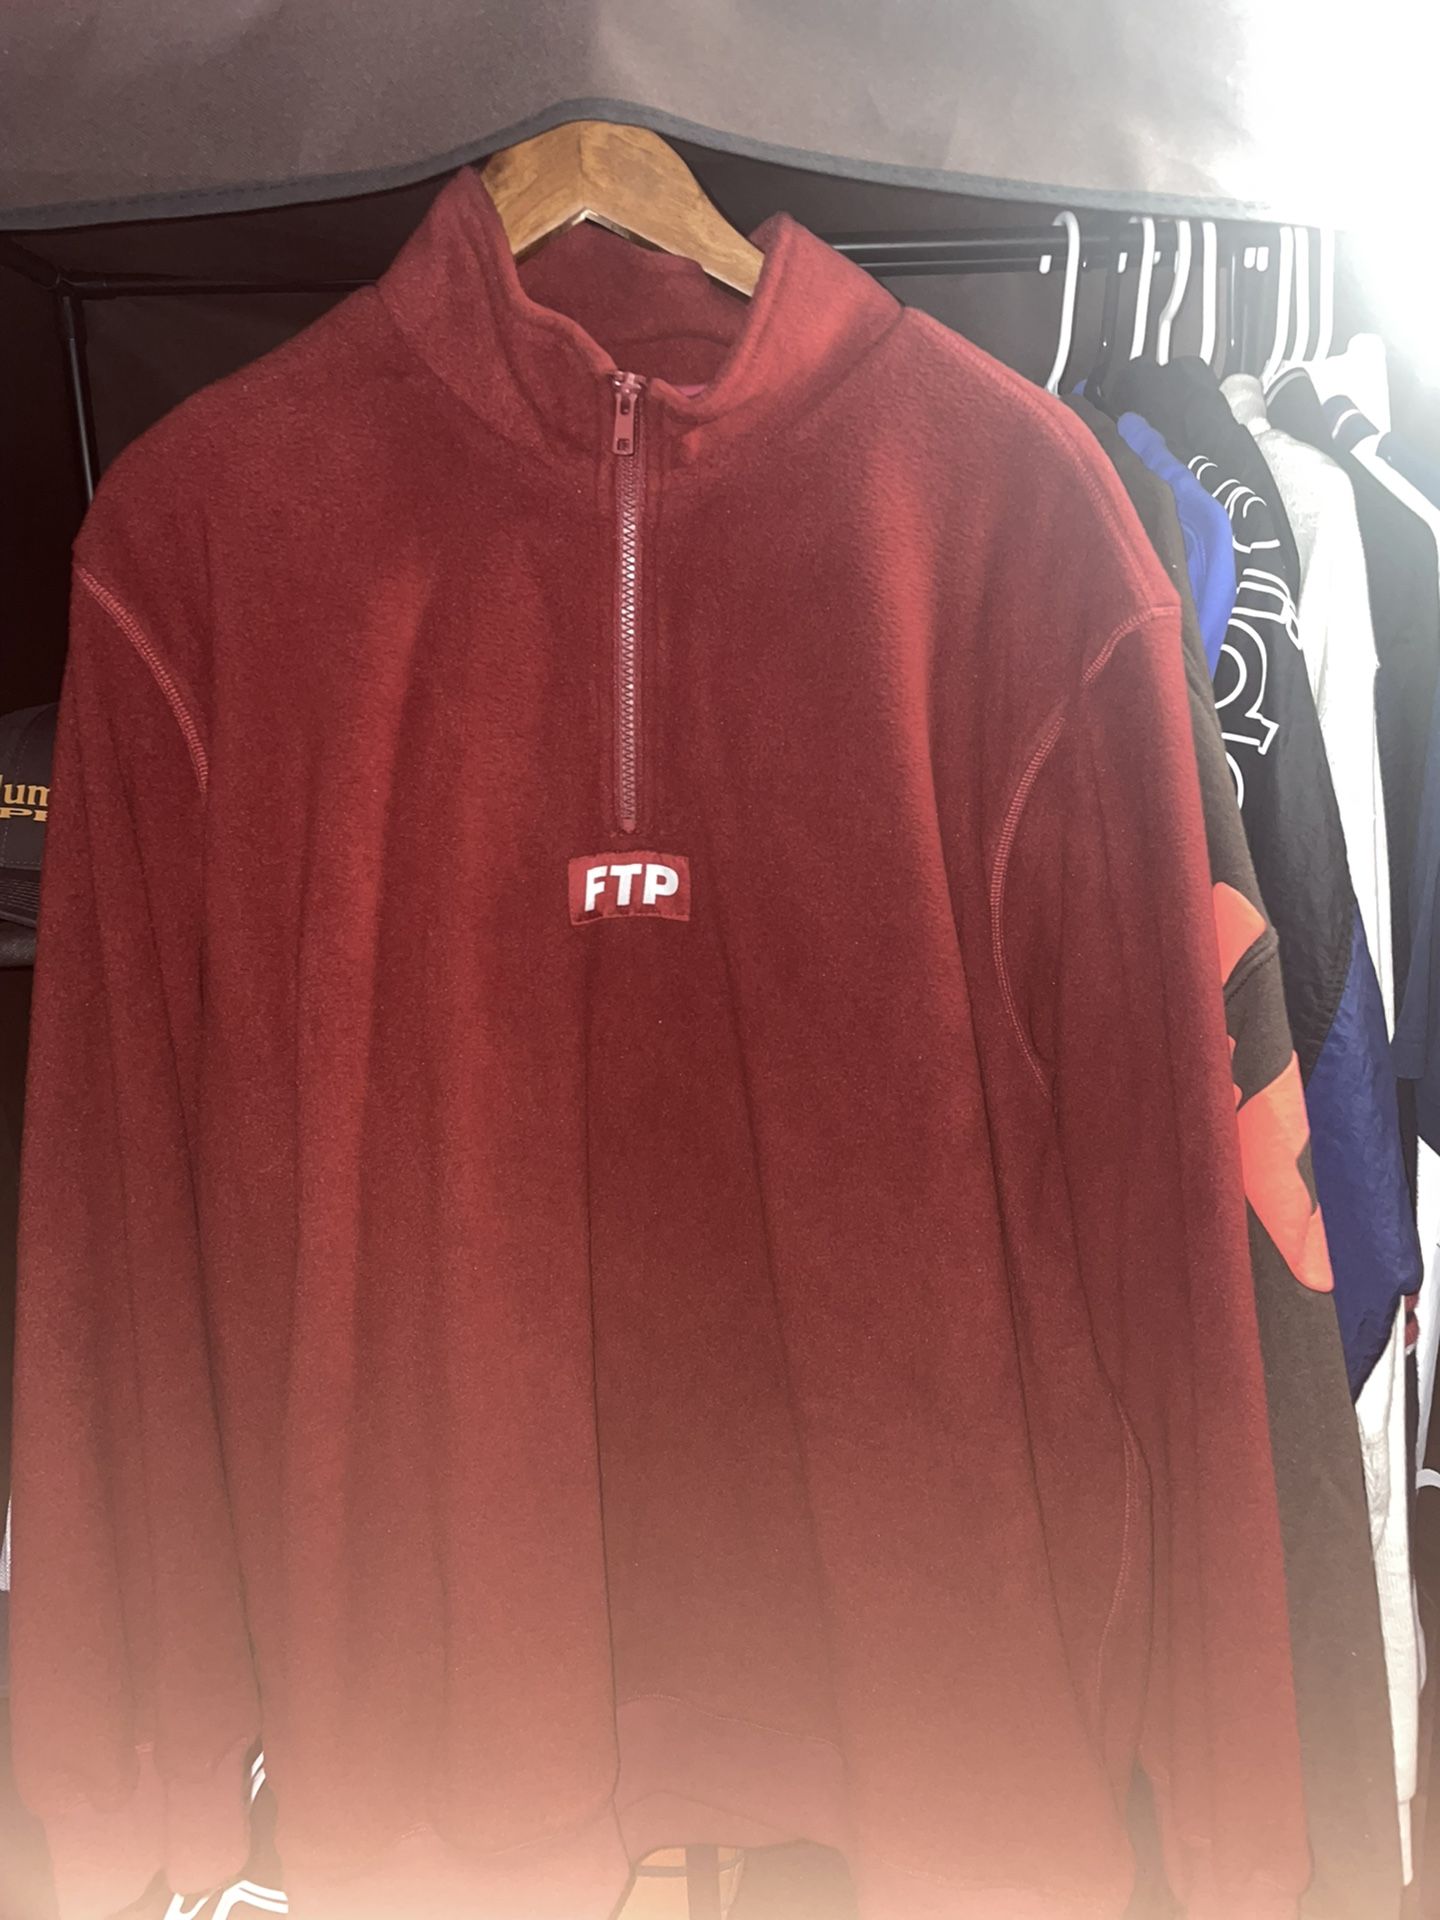 FTP half-zip Red Sherpa fleece pullover XL